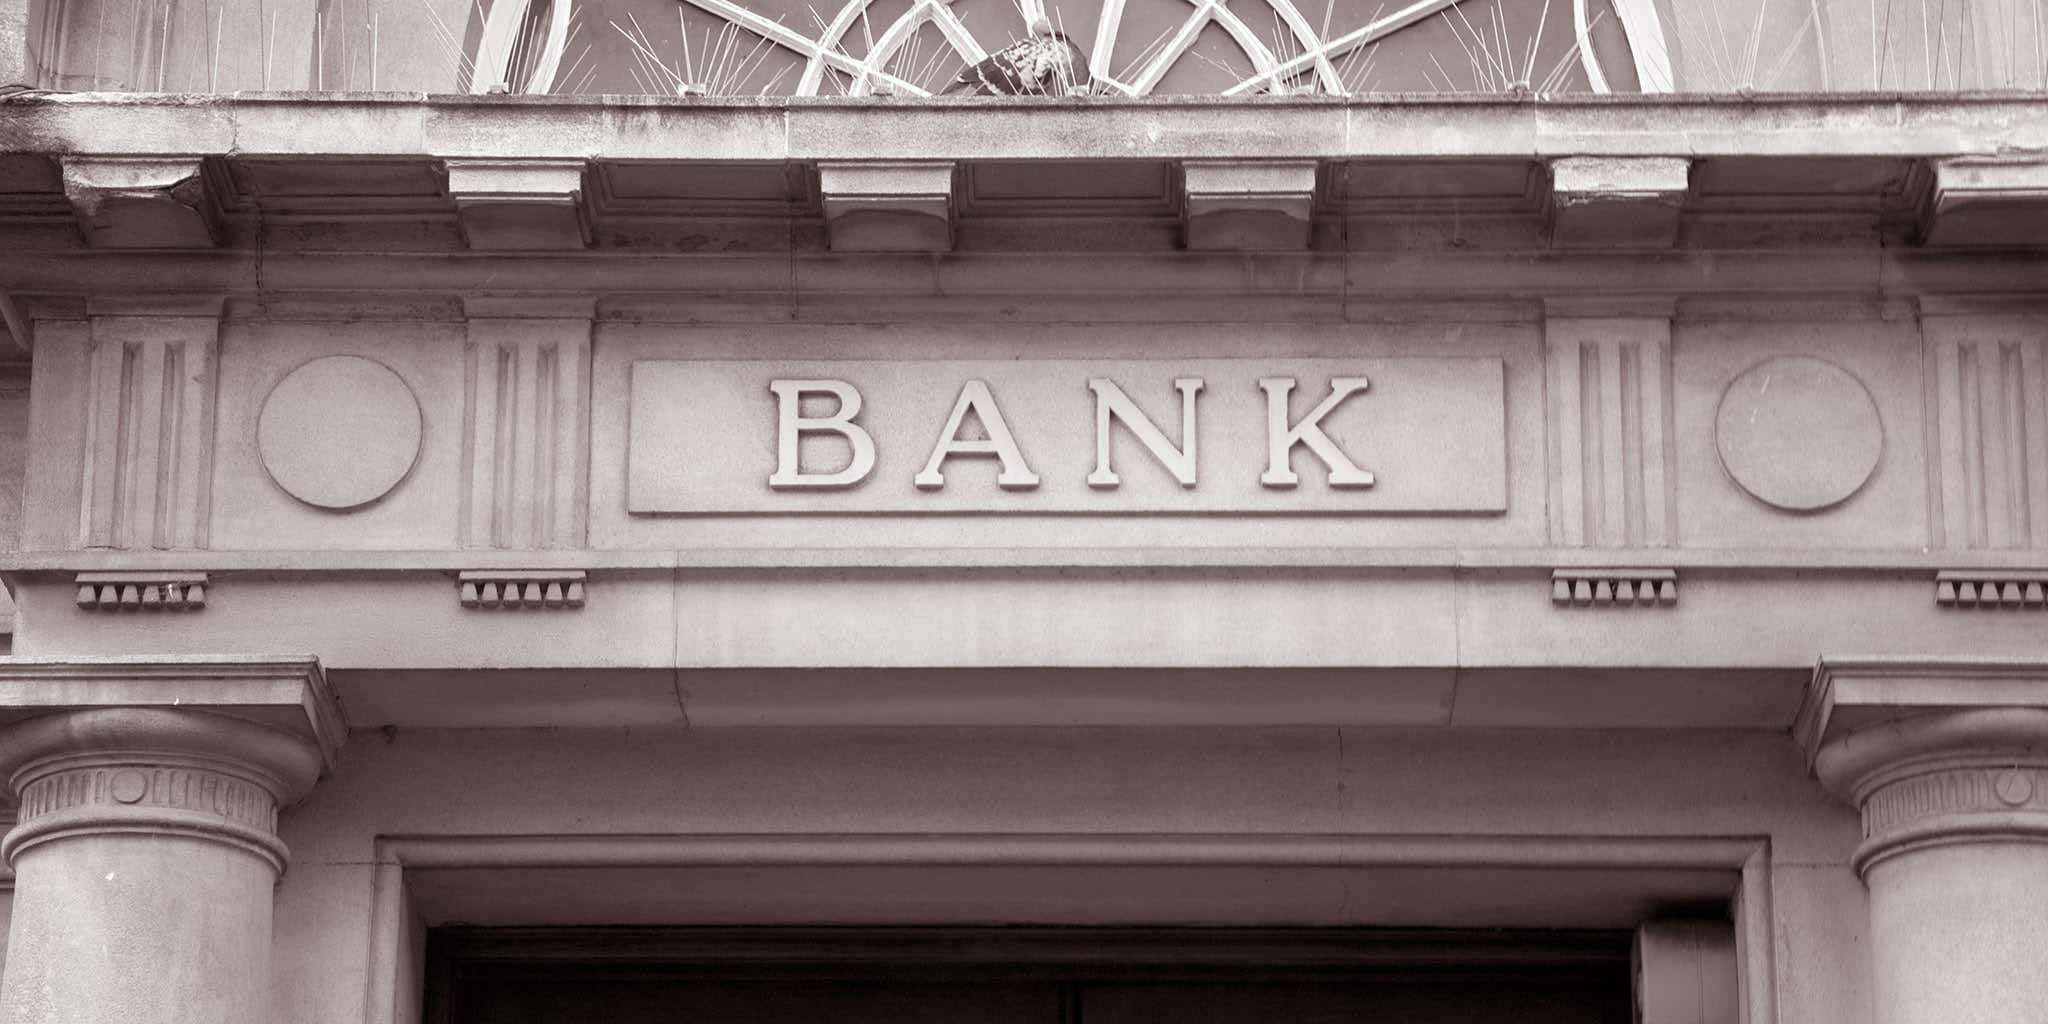 Bank sign over entrance door